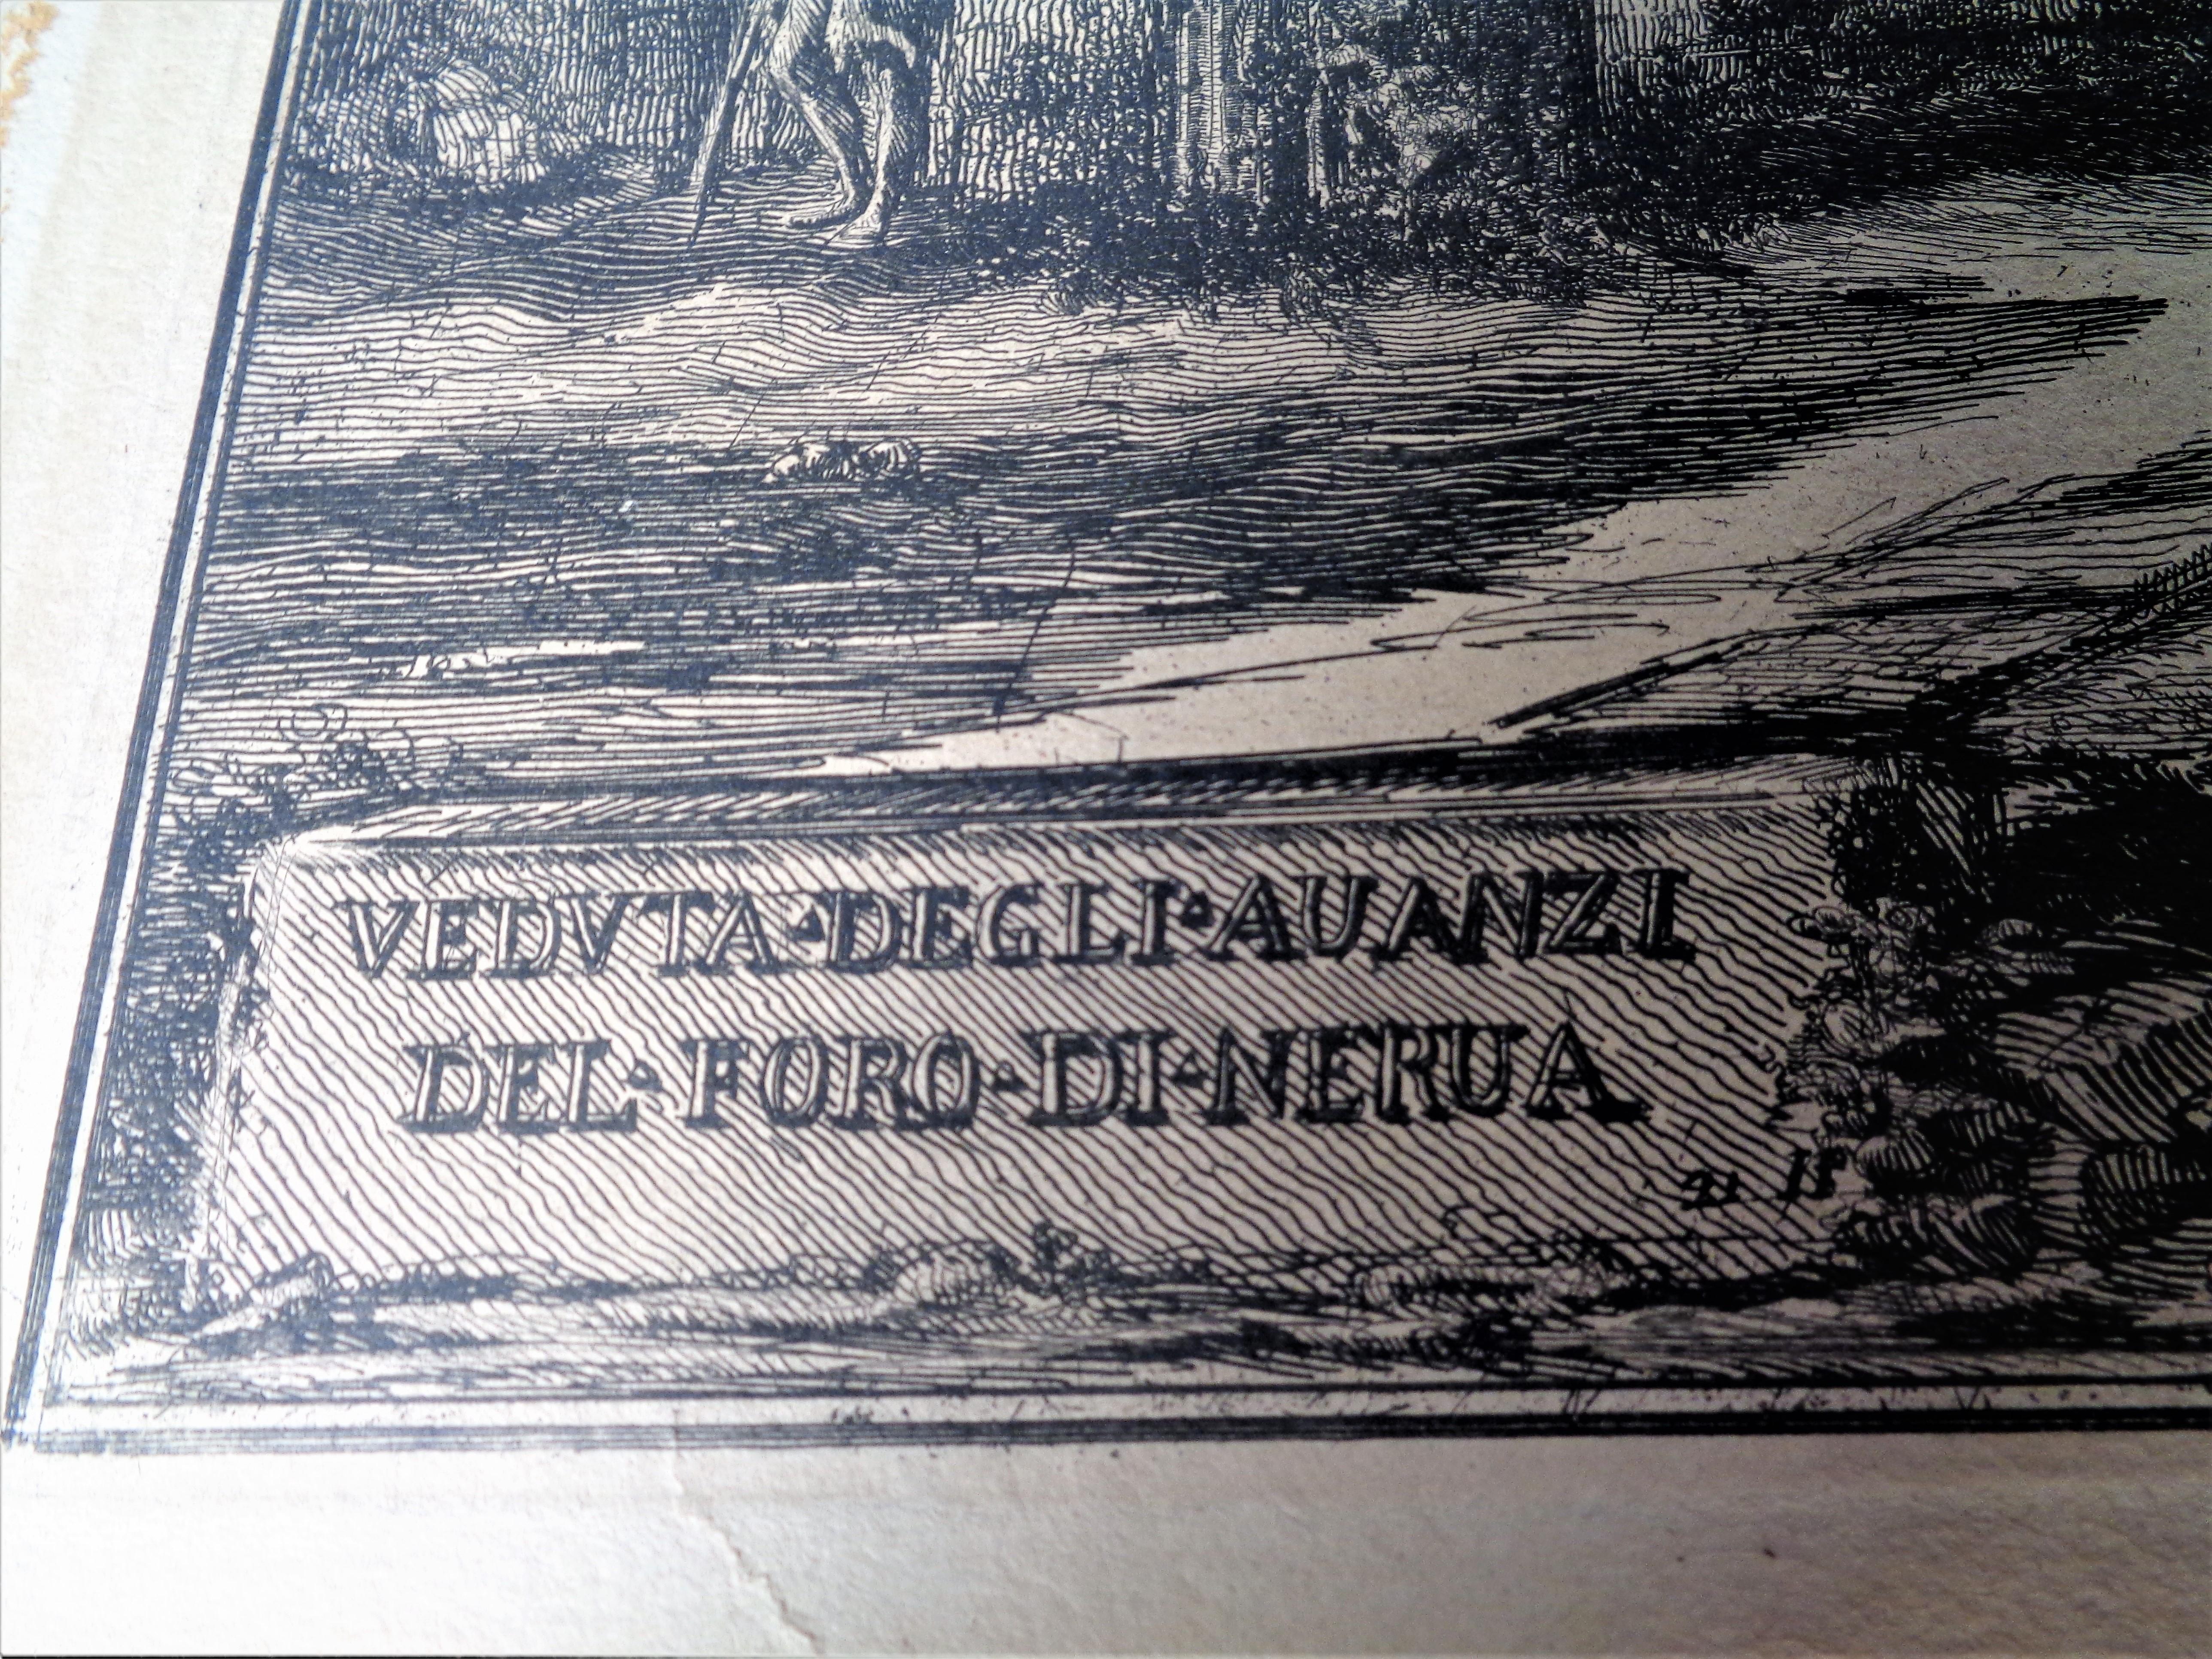 Italian After Giovanni Battista Piranesi, The Forum of Nerva - Francesco Piranesi, 1800